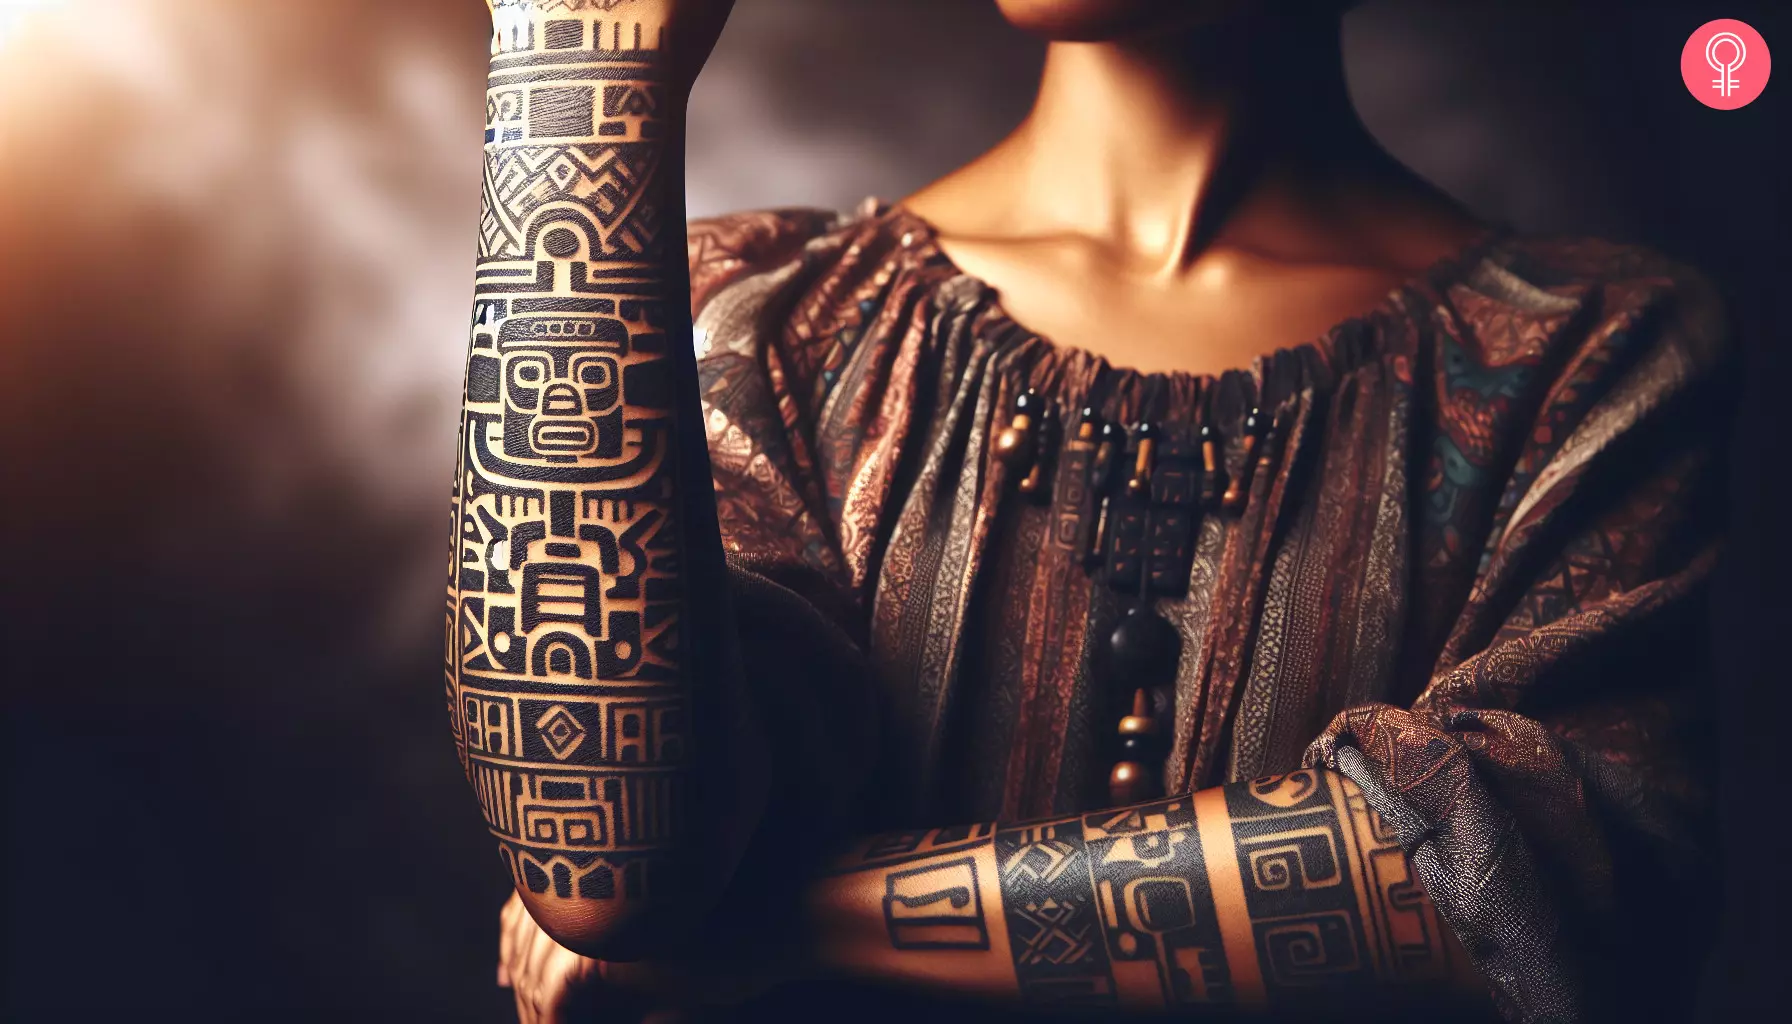 A Mayan glyph tattoo on a woman’s arm